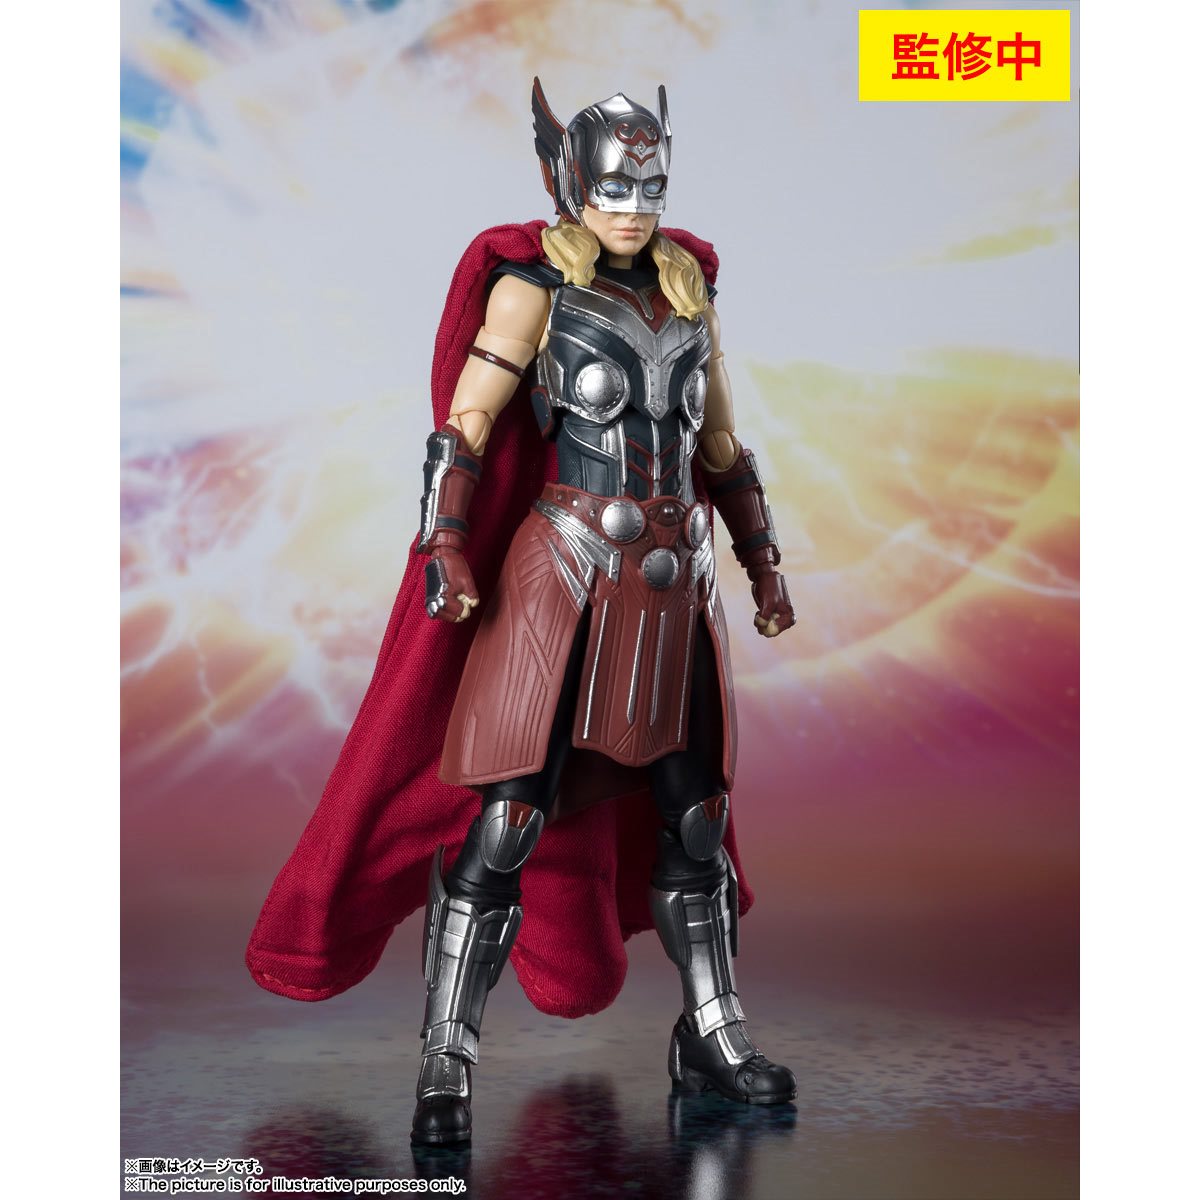 Bandai Tamashii SH Figuarts: Marvel Thor Love and Thunder - Mighty Thor Figura de Accion